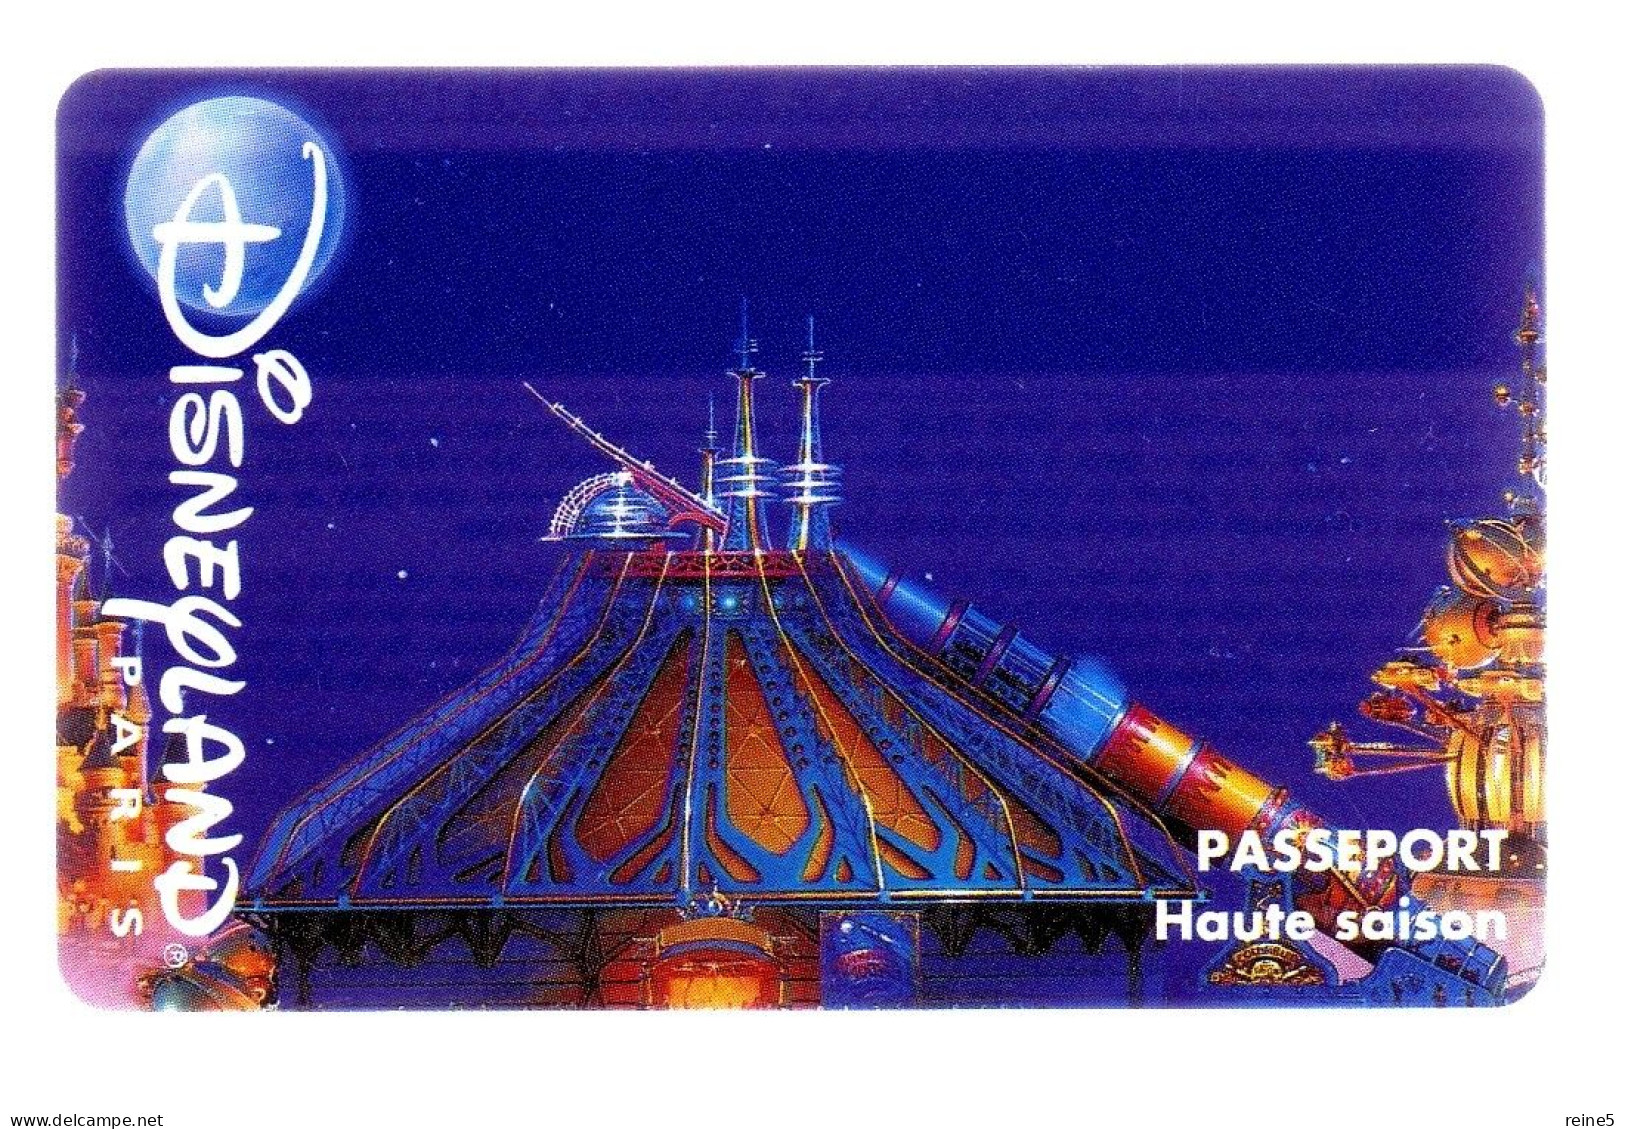 PASSEPORT HAUTE SAISON DISNEYLAND PARIS -TRES BON ETAT -REF-PASS DISNEY-15 - Disney-Pässe